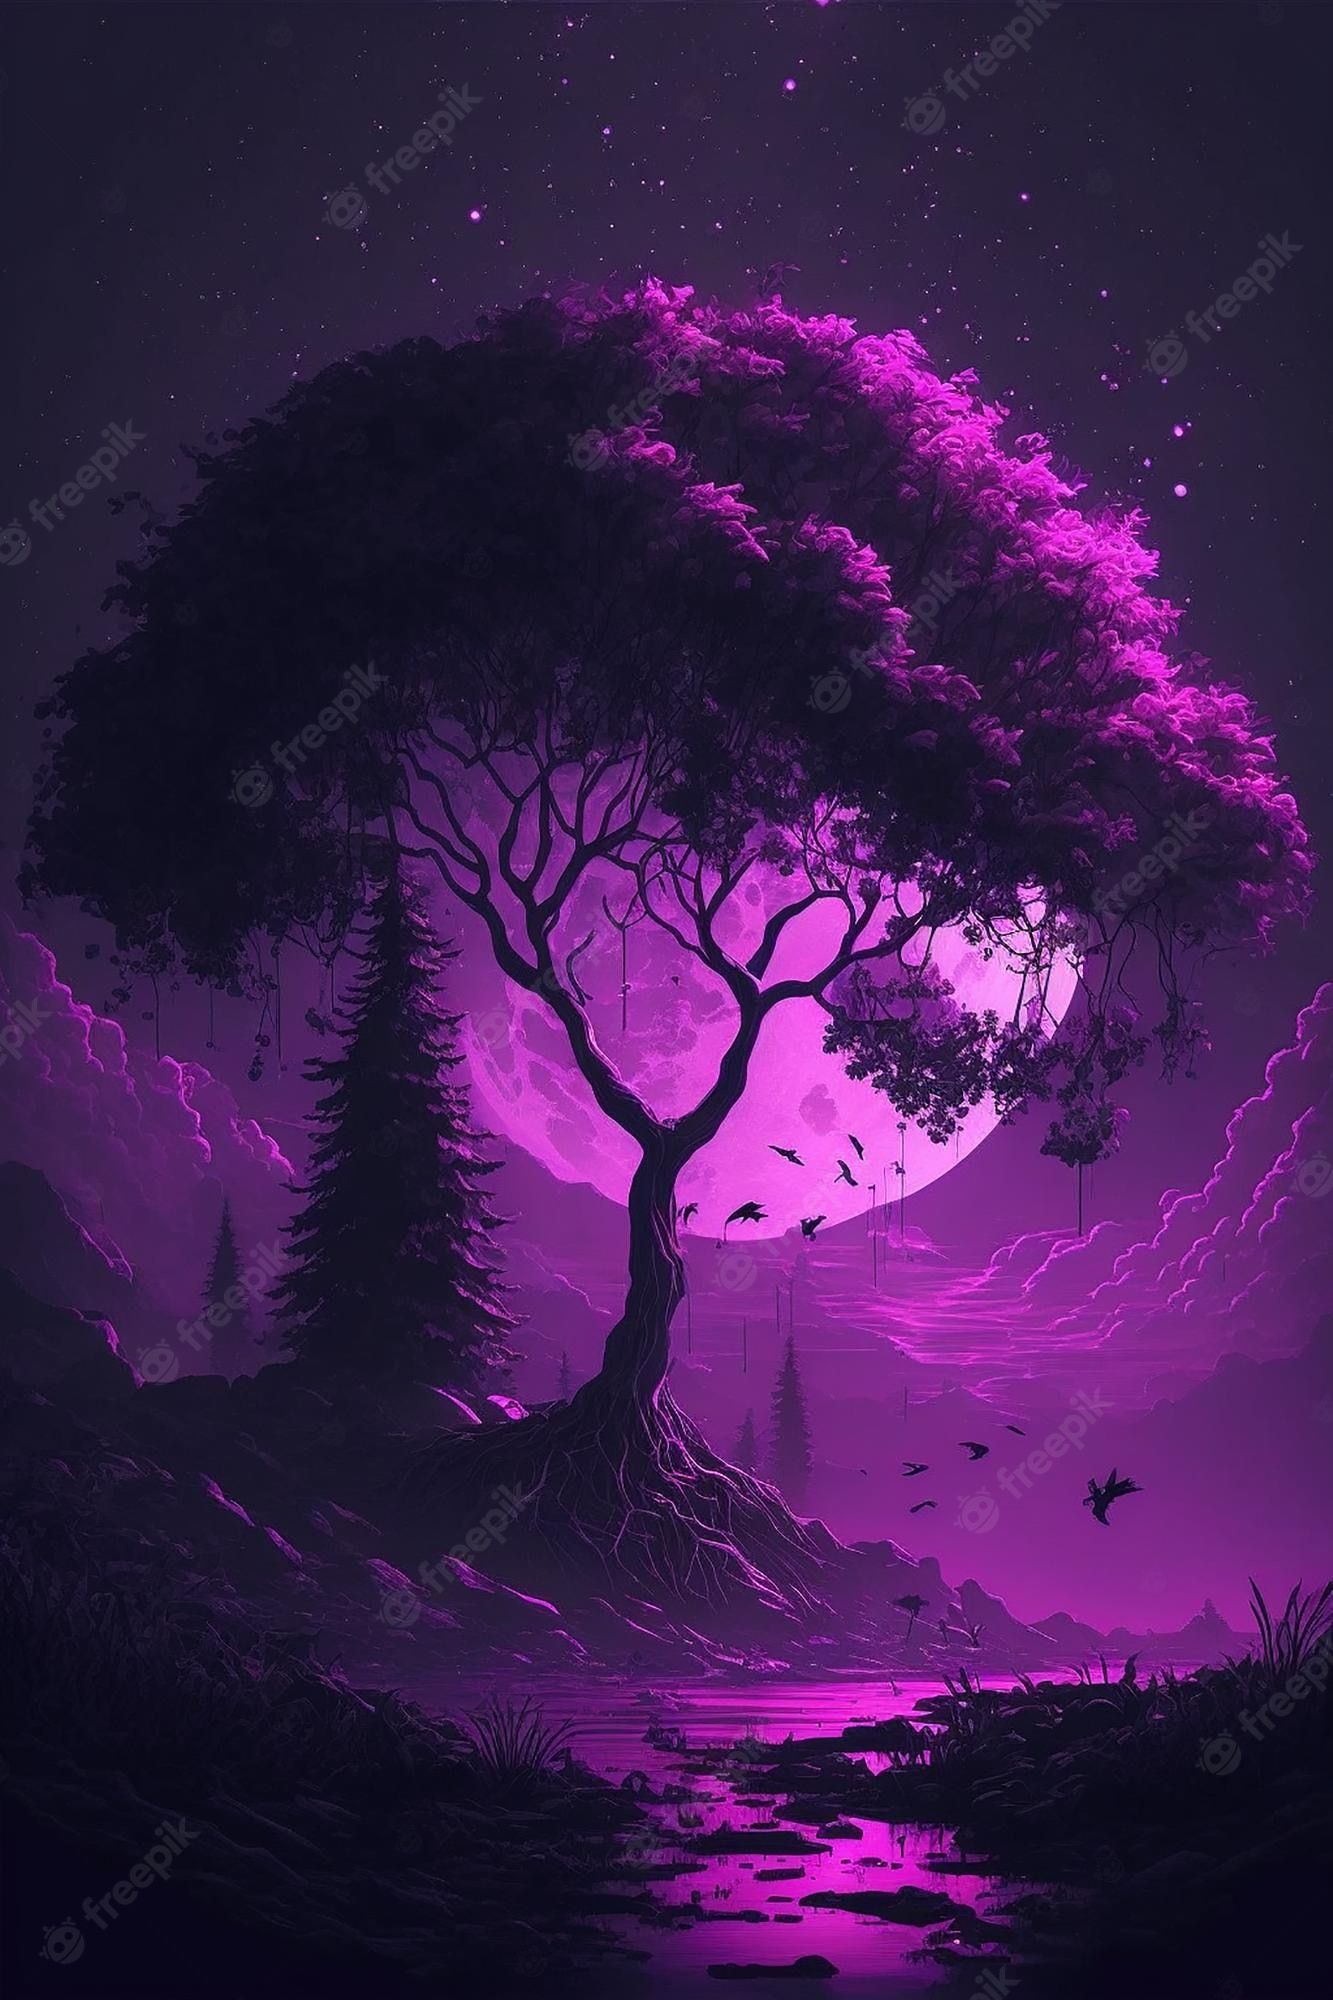 Premium Photo. Purple aesthetic wallpaper, night landscape, forest, mountain, moon